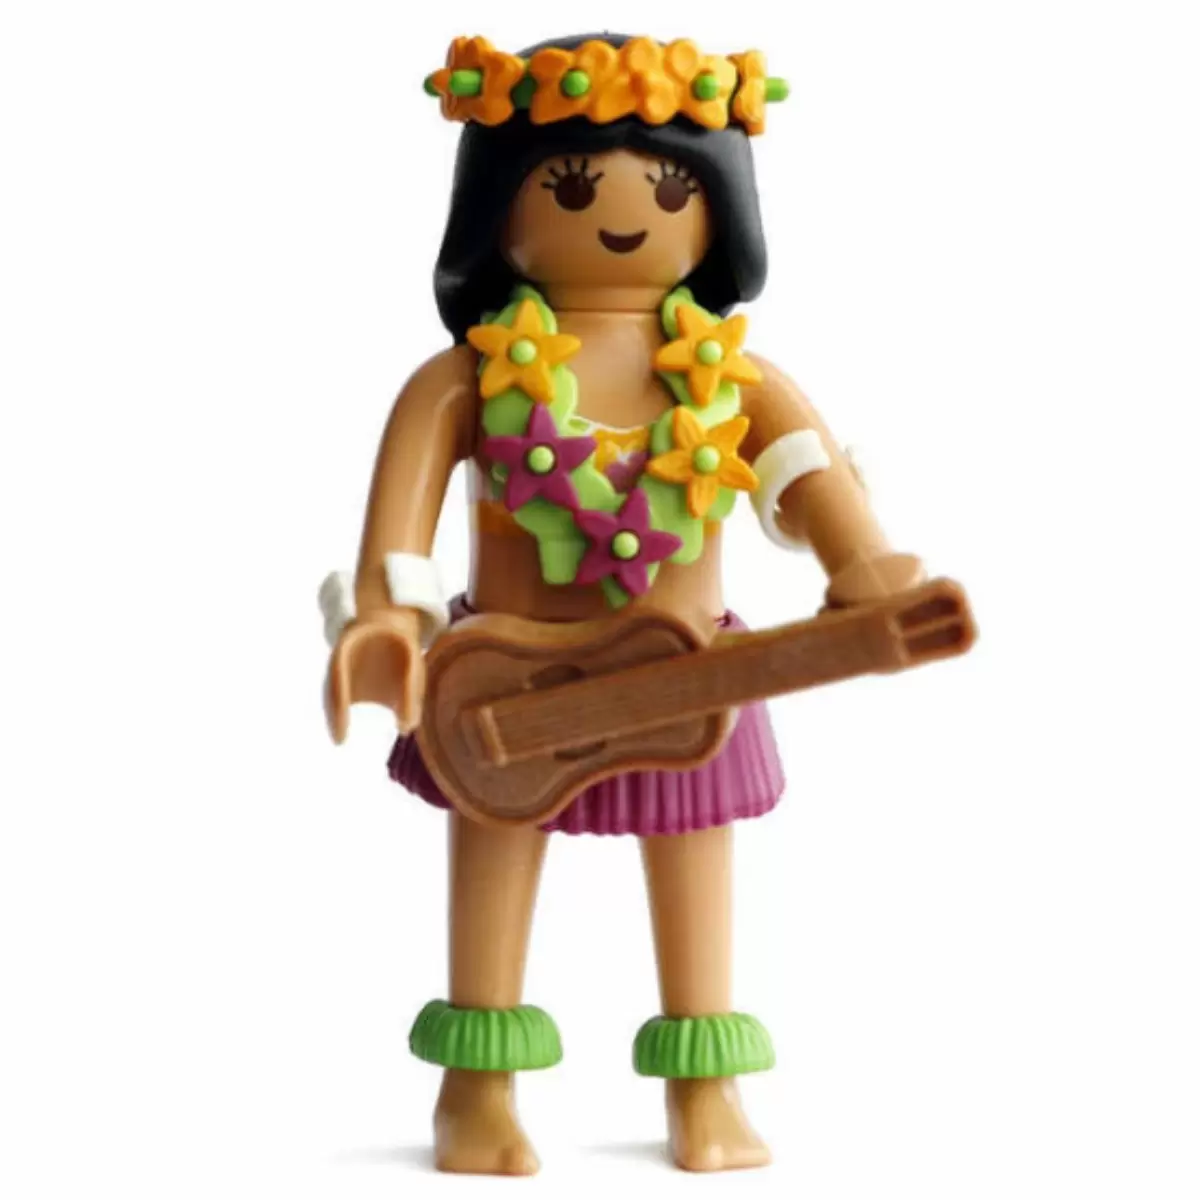 Playmobil Figures : Series 15 - Hawaian